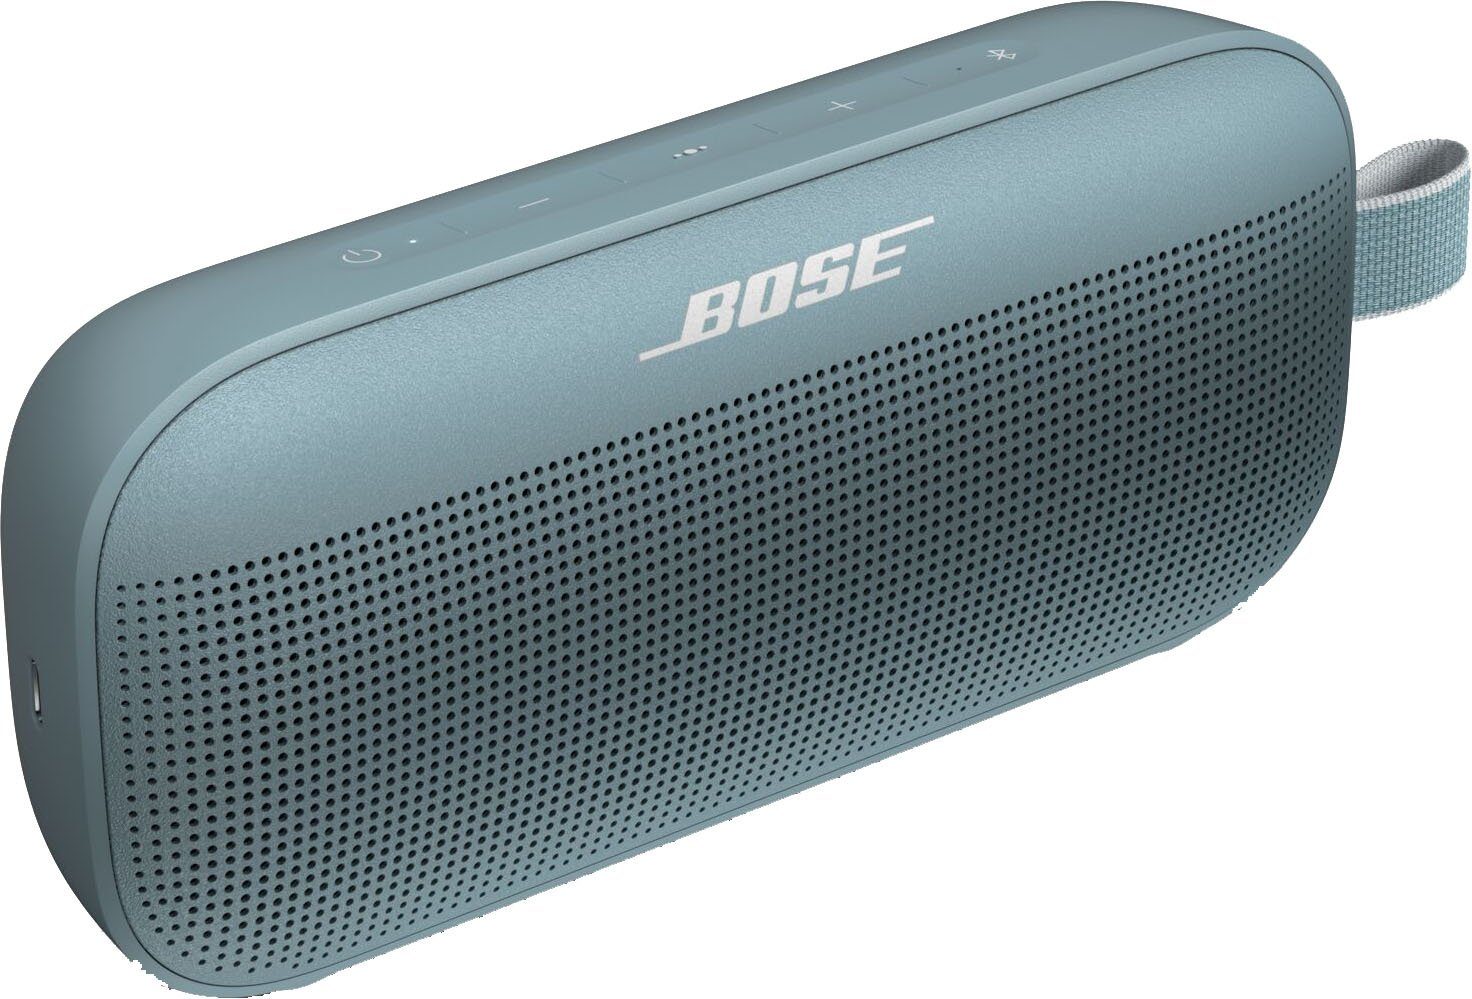 SoundLink Bose blau Lautsprecher Flex Stereo (Bluetooth)